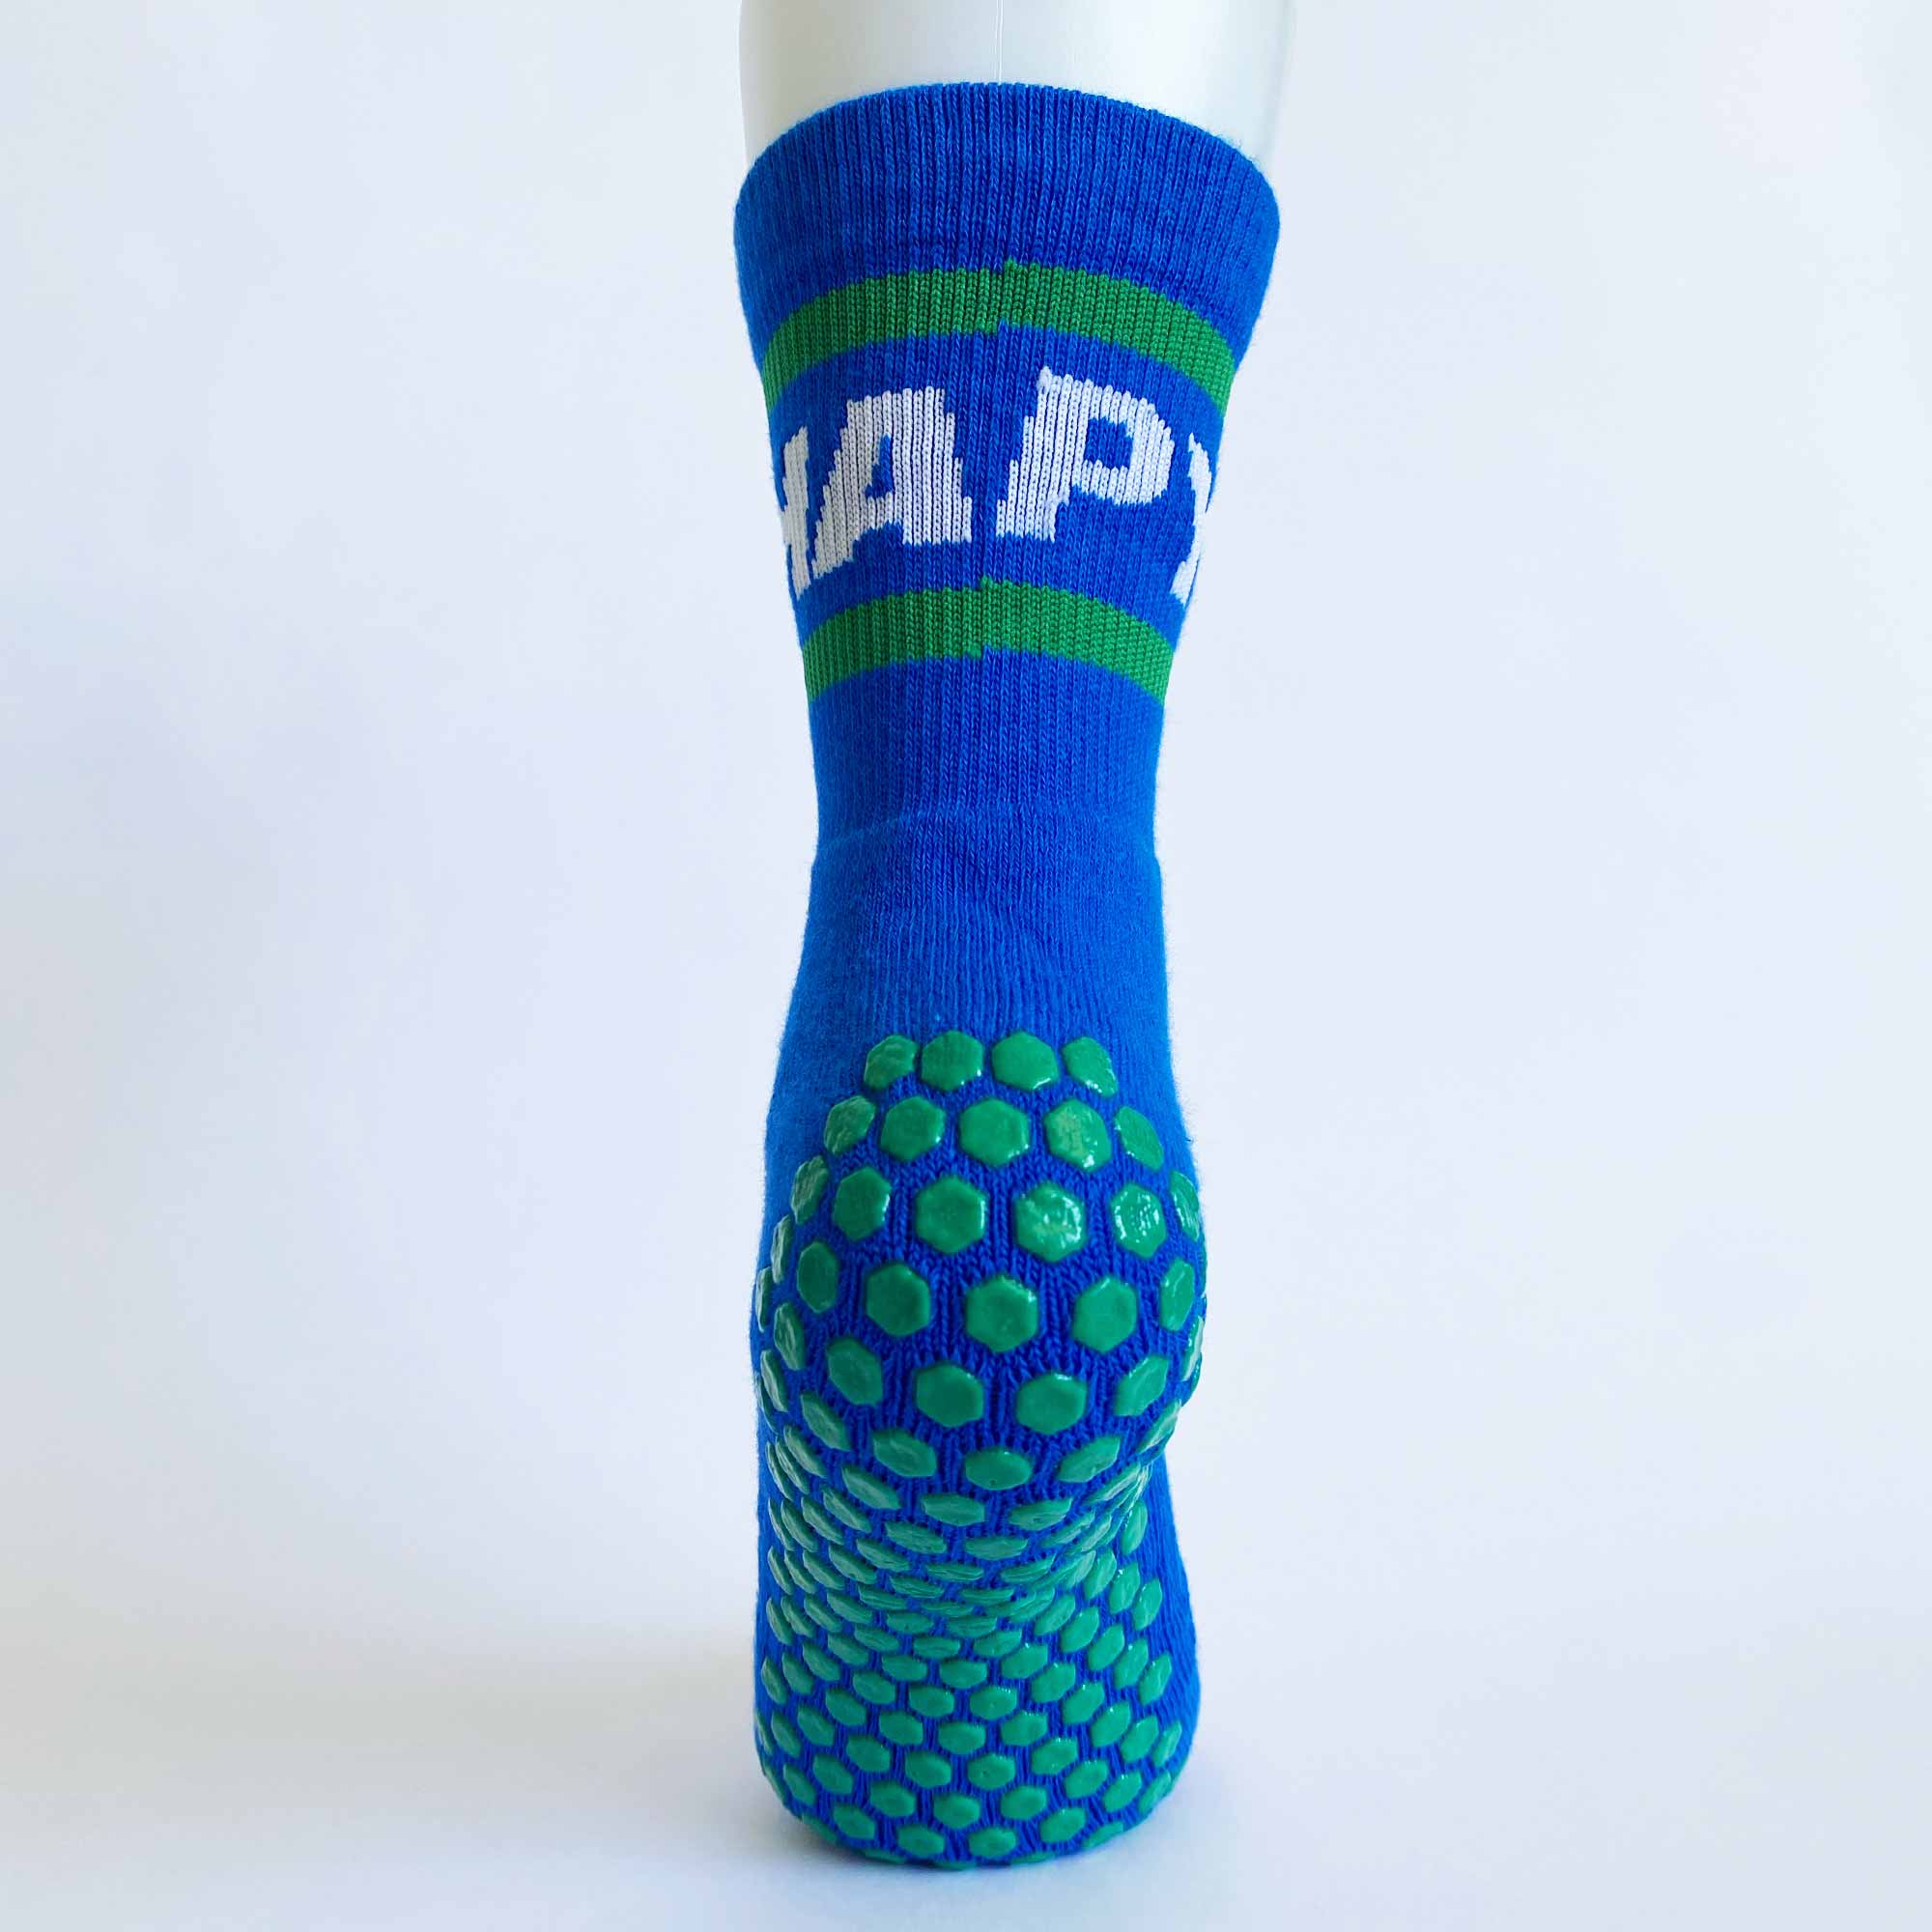 Pyranha v2.0 Grip Sock